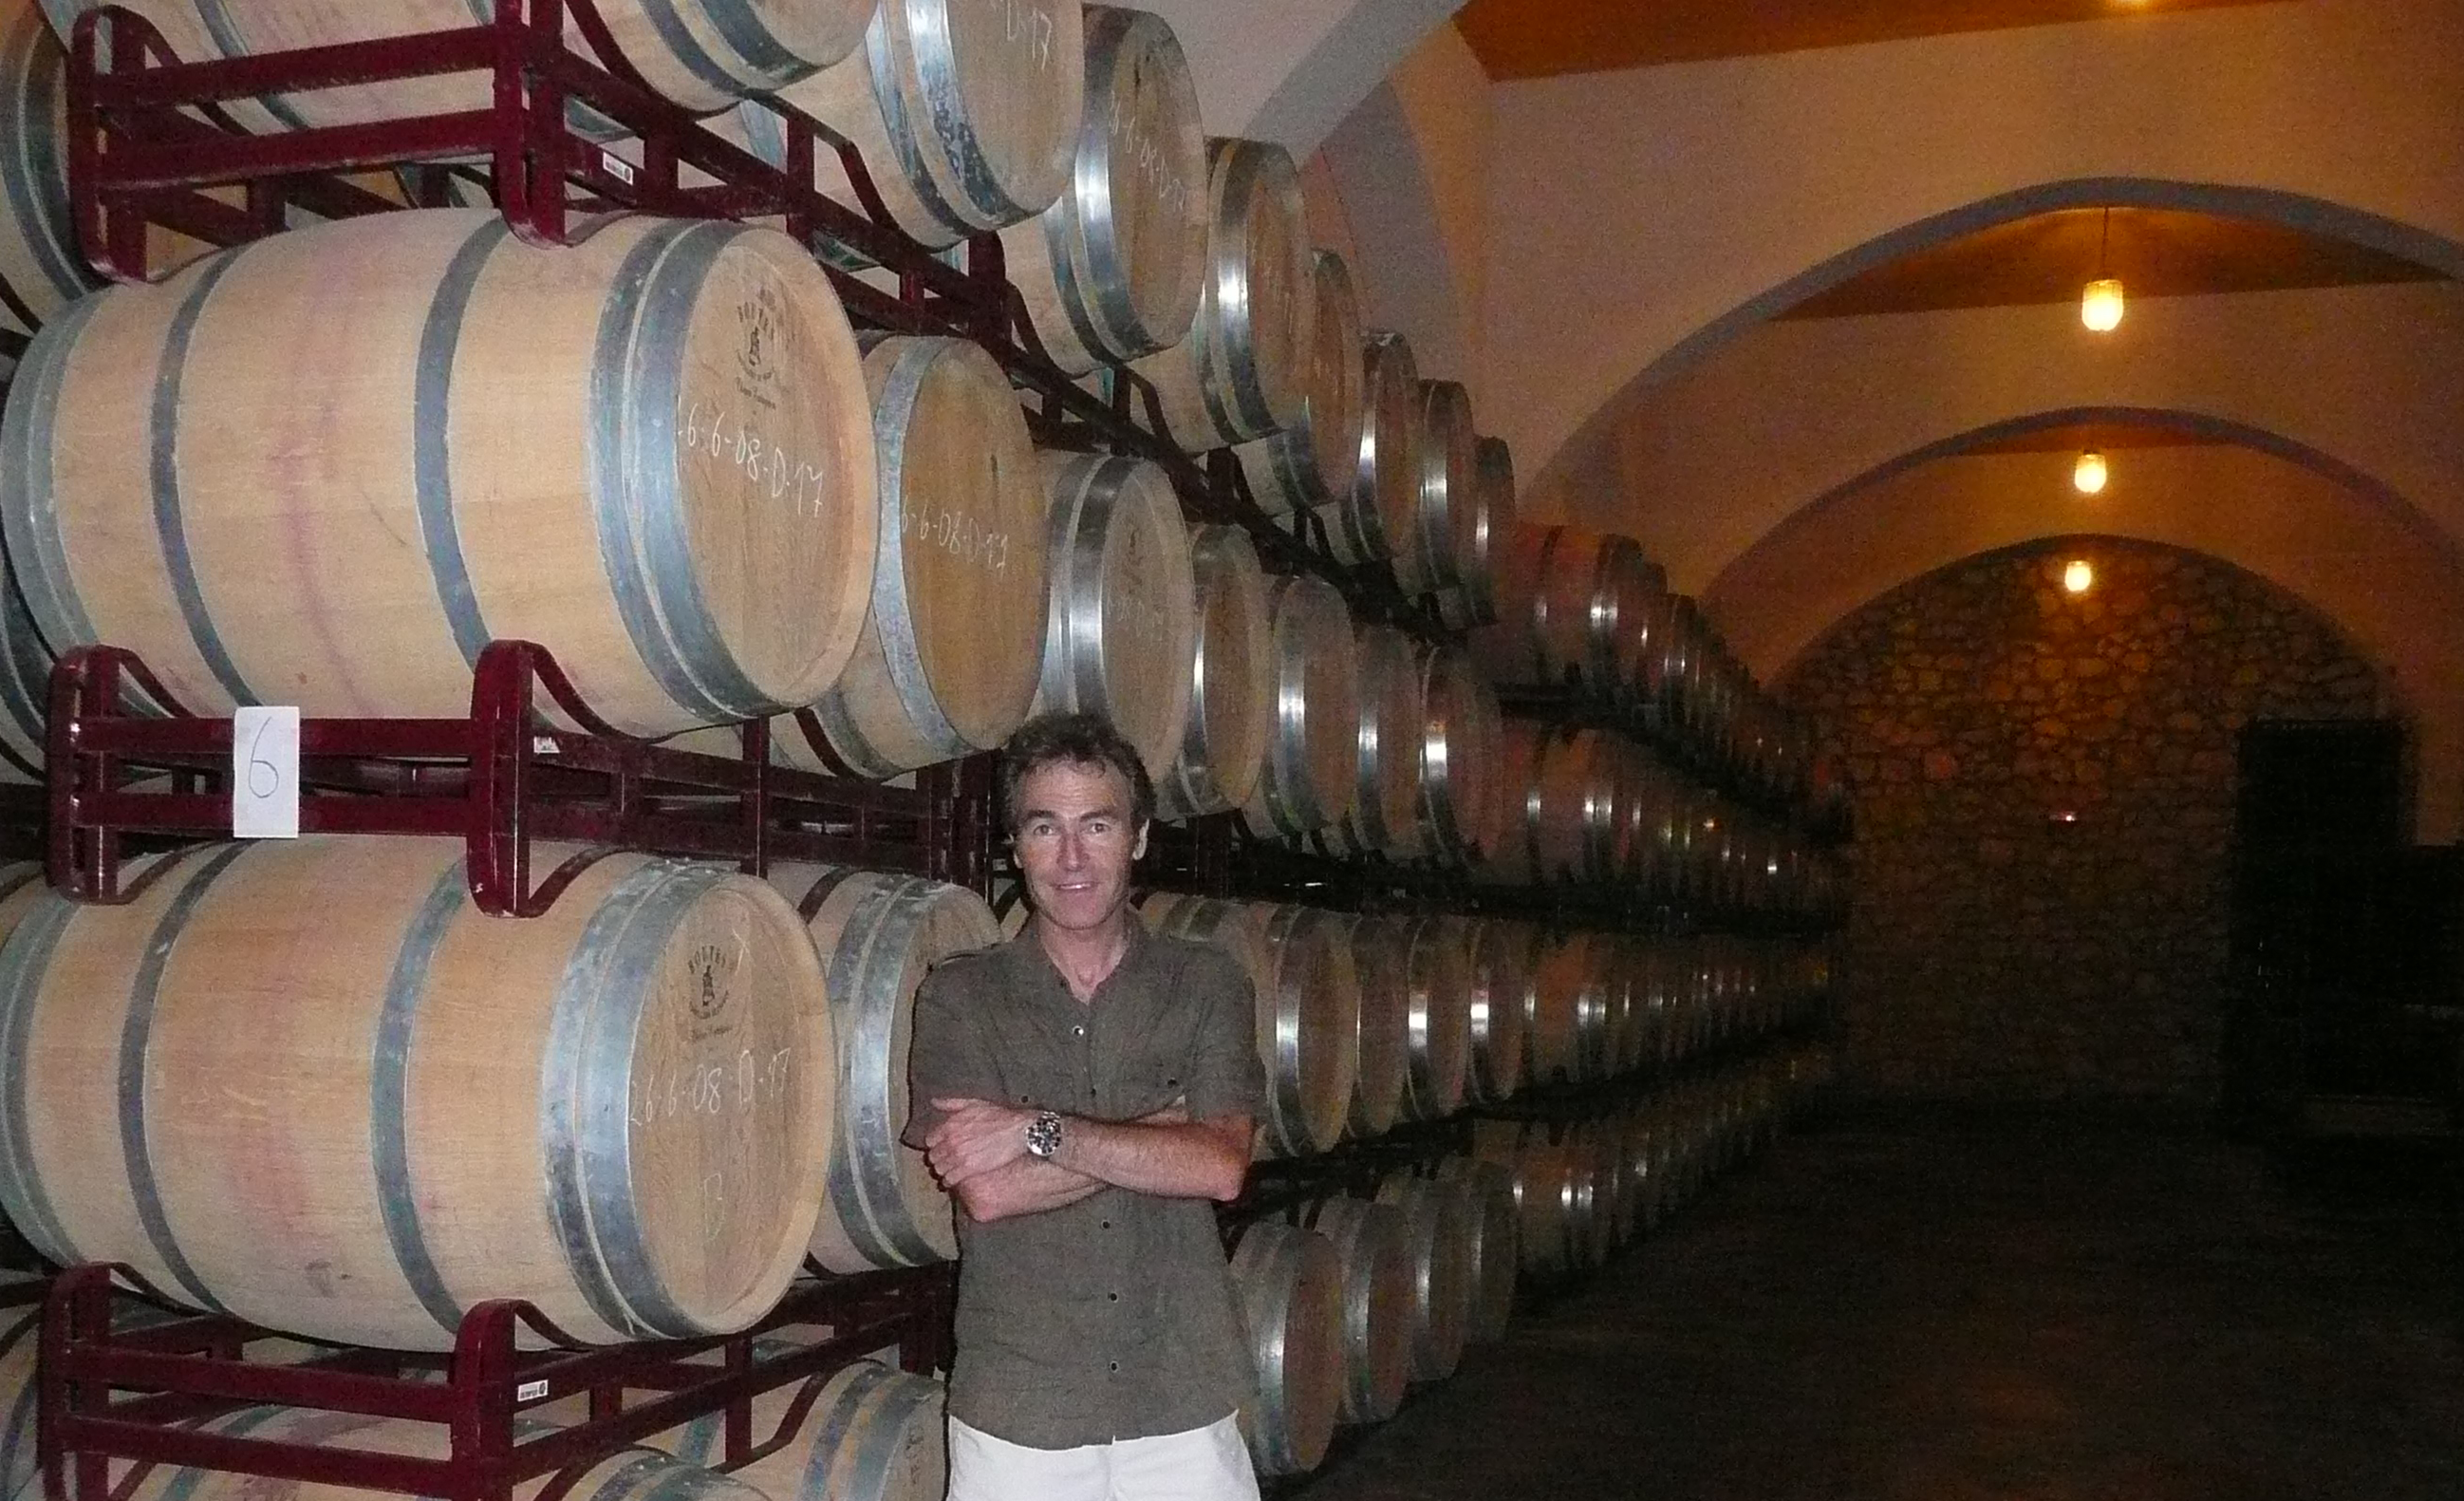 Toni with Reserva wines in barrel